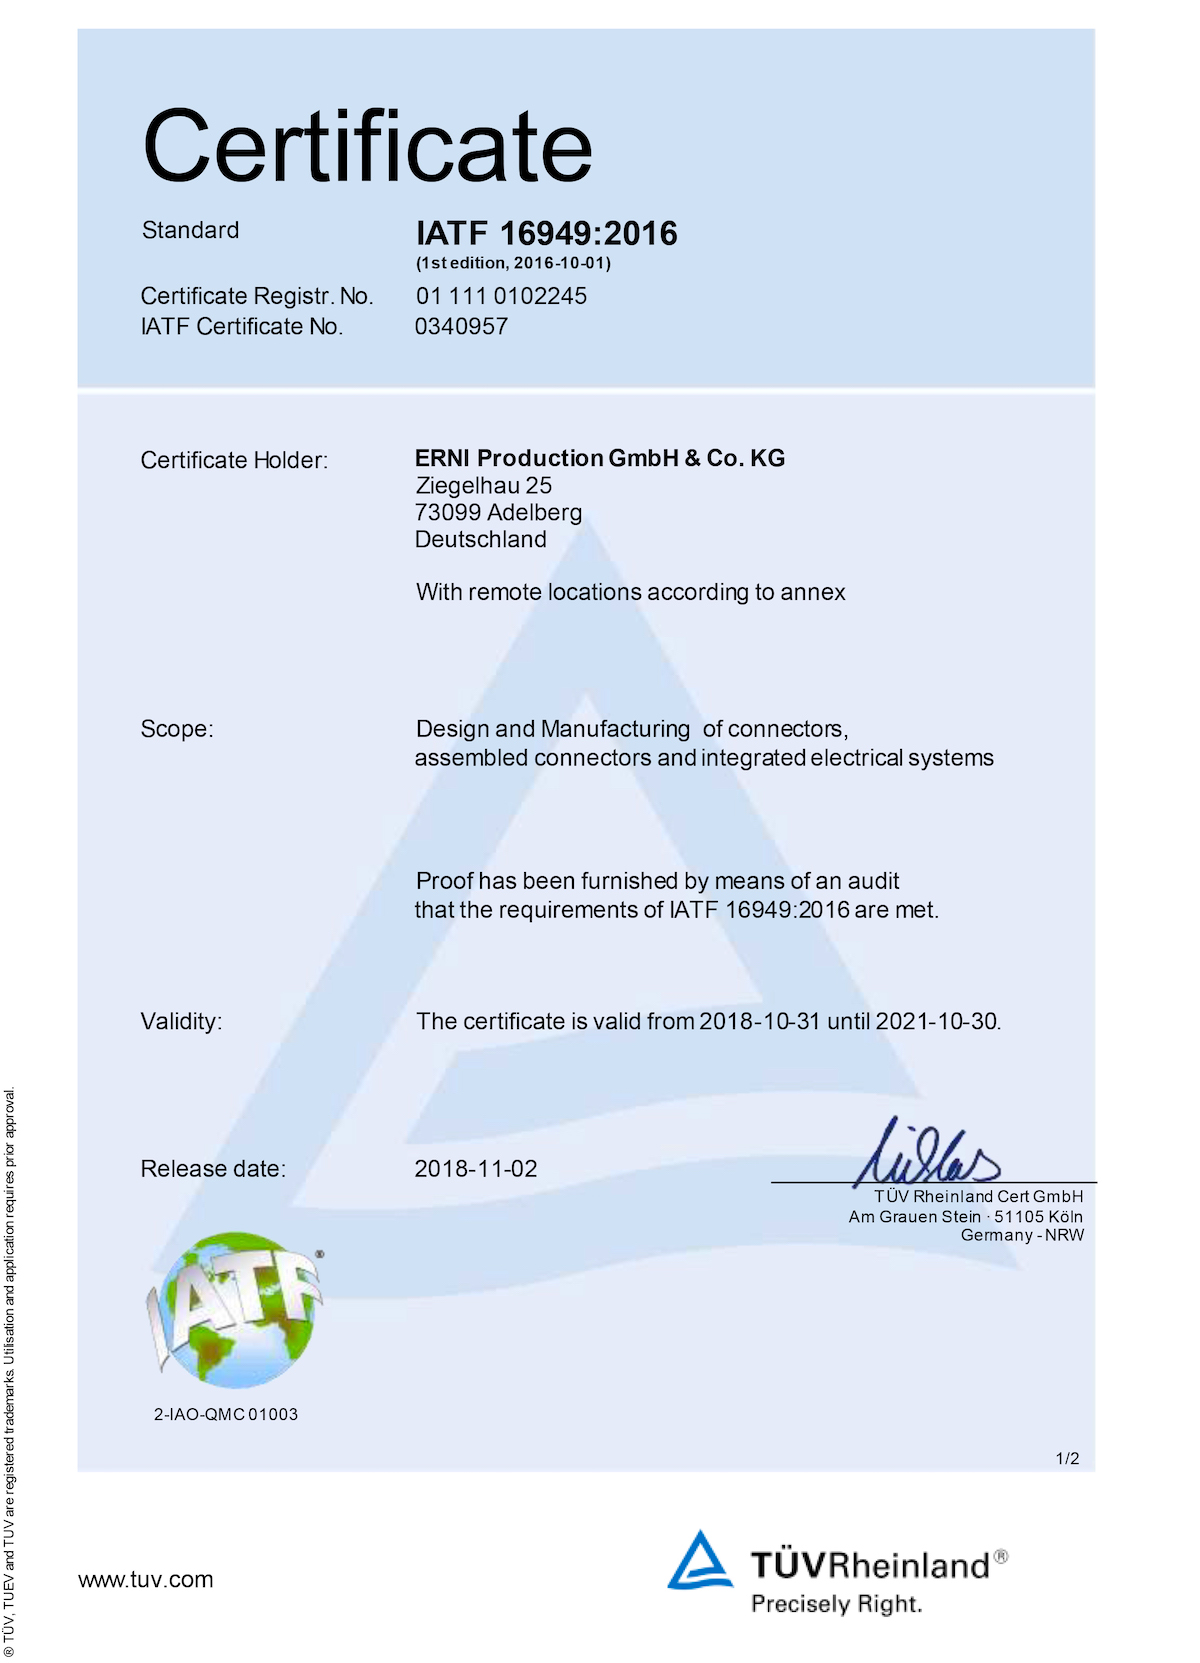 February 2019 Connector Industry News: ERNI-IATF-Certification